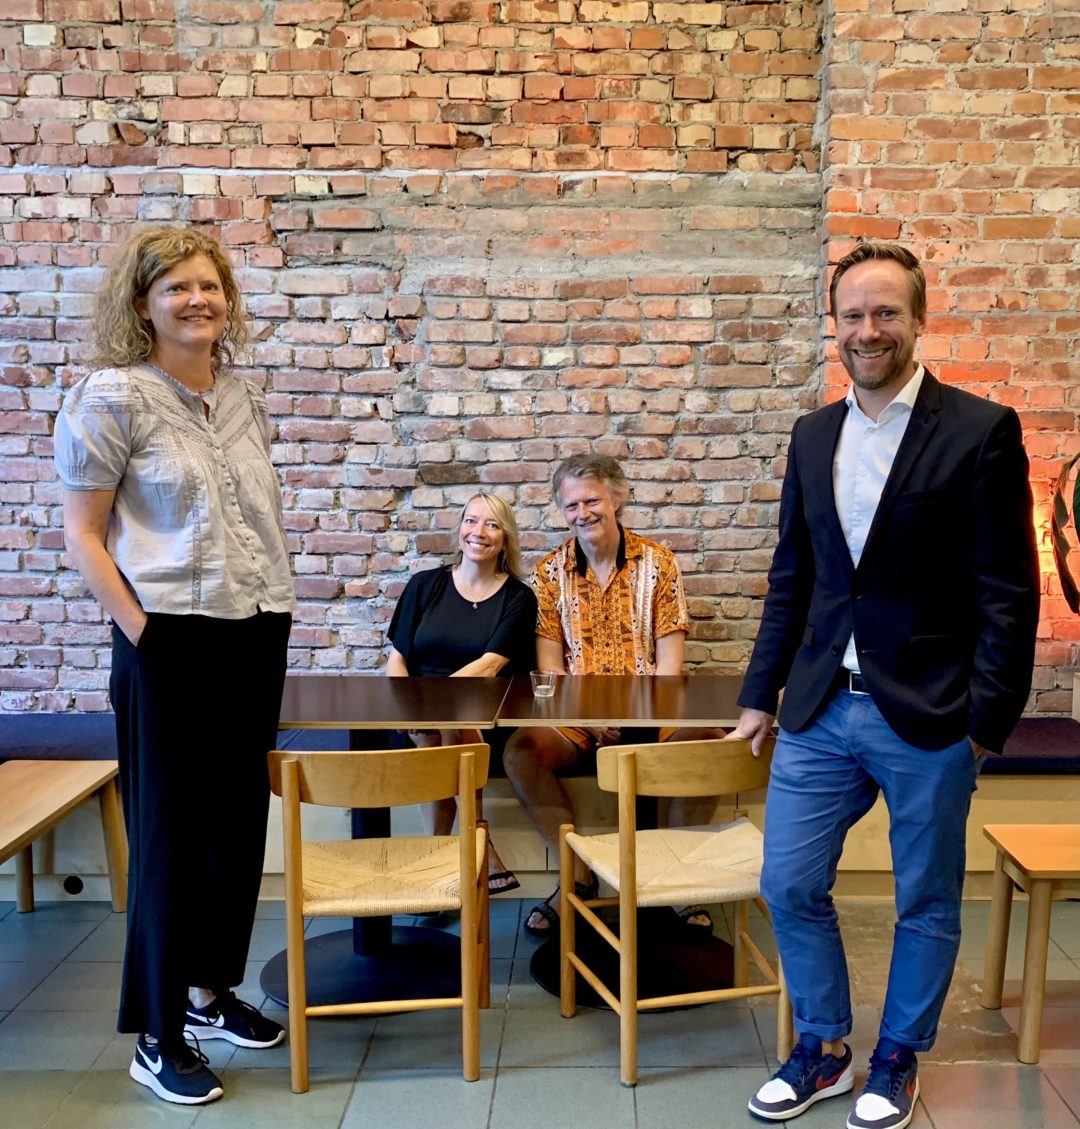 Leder i Vålerenga Vel, Hege Stensrud Høsøien og utviklingsdirektør i OBOS, Geir Graff-Kallevåg møter Maren og Erling til samtale om Sotahjørnets fremtid.